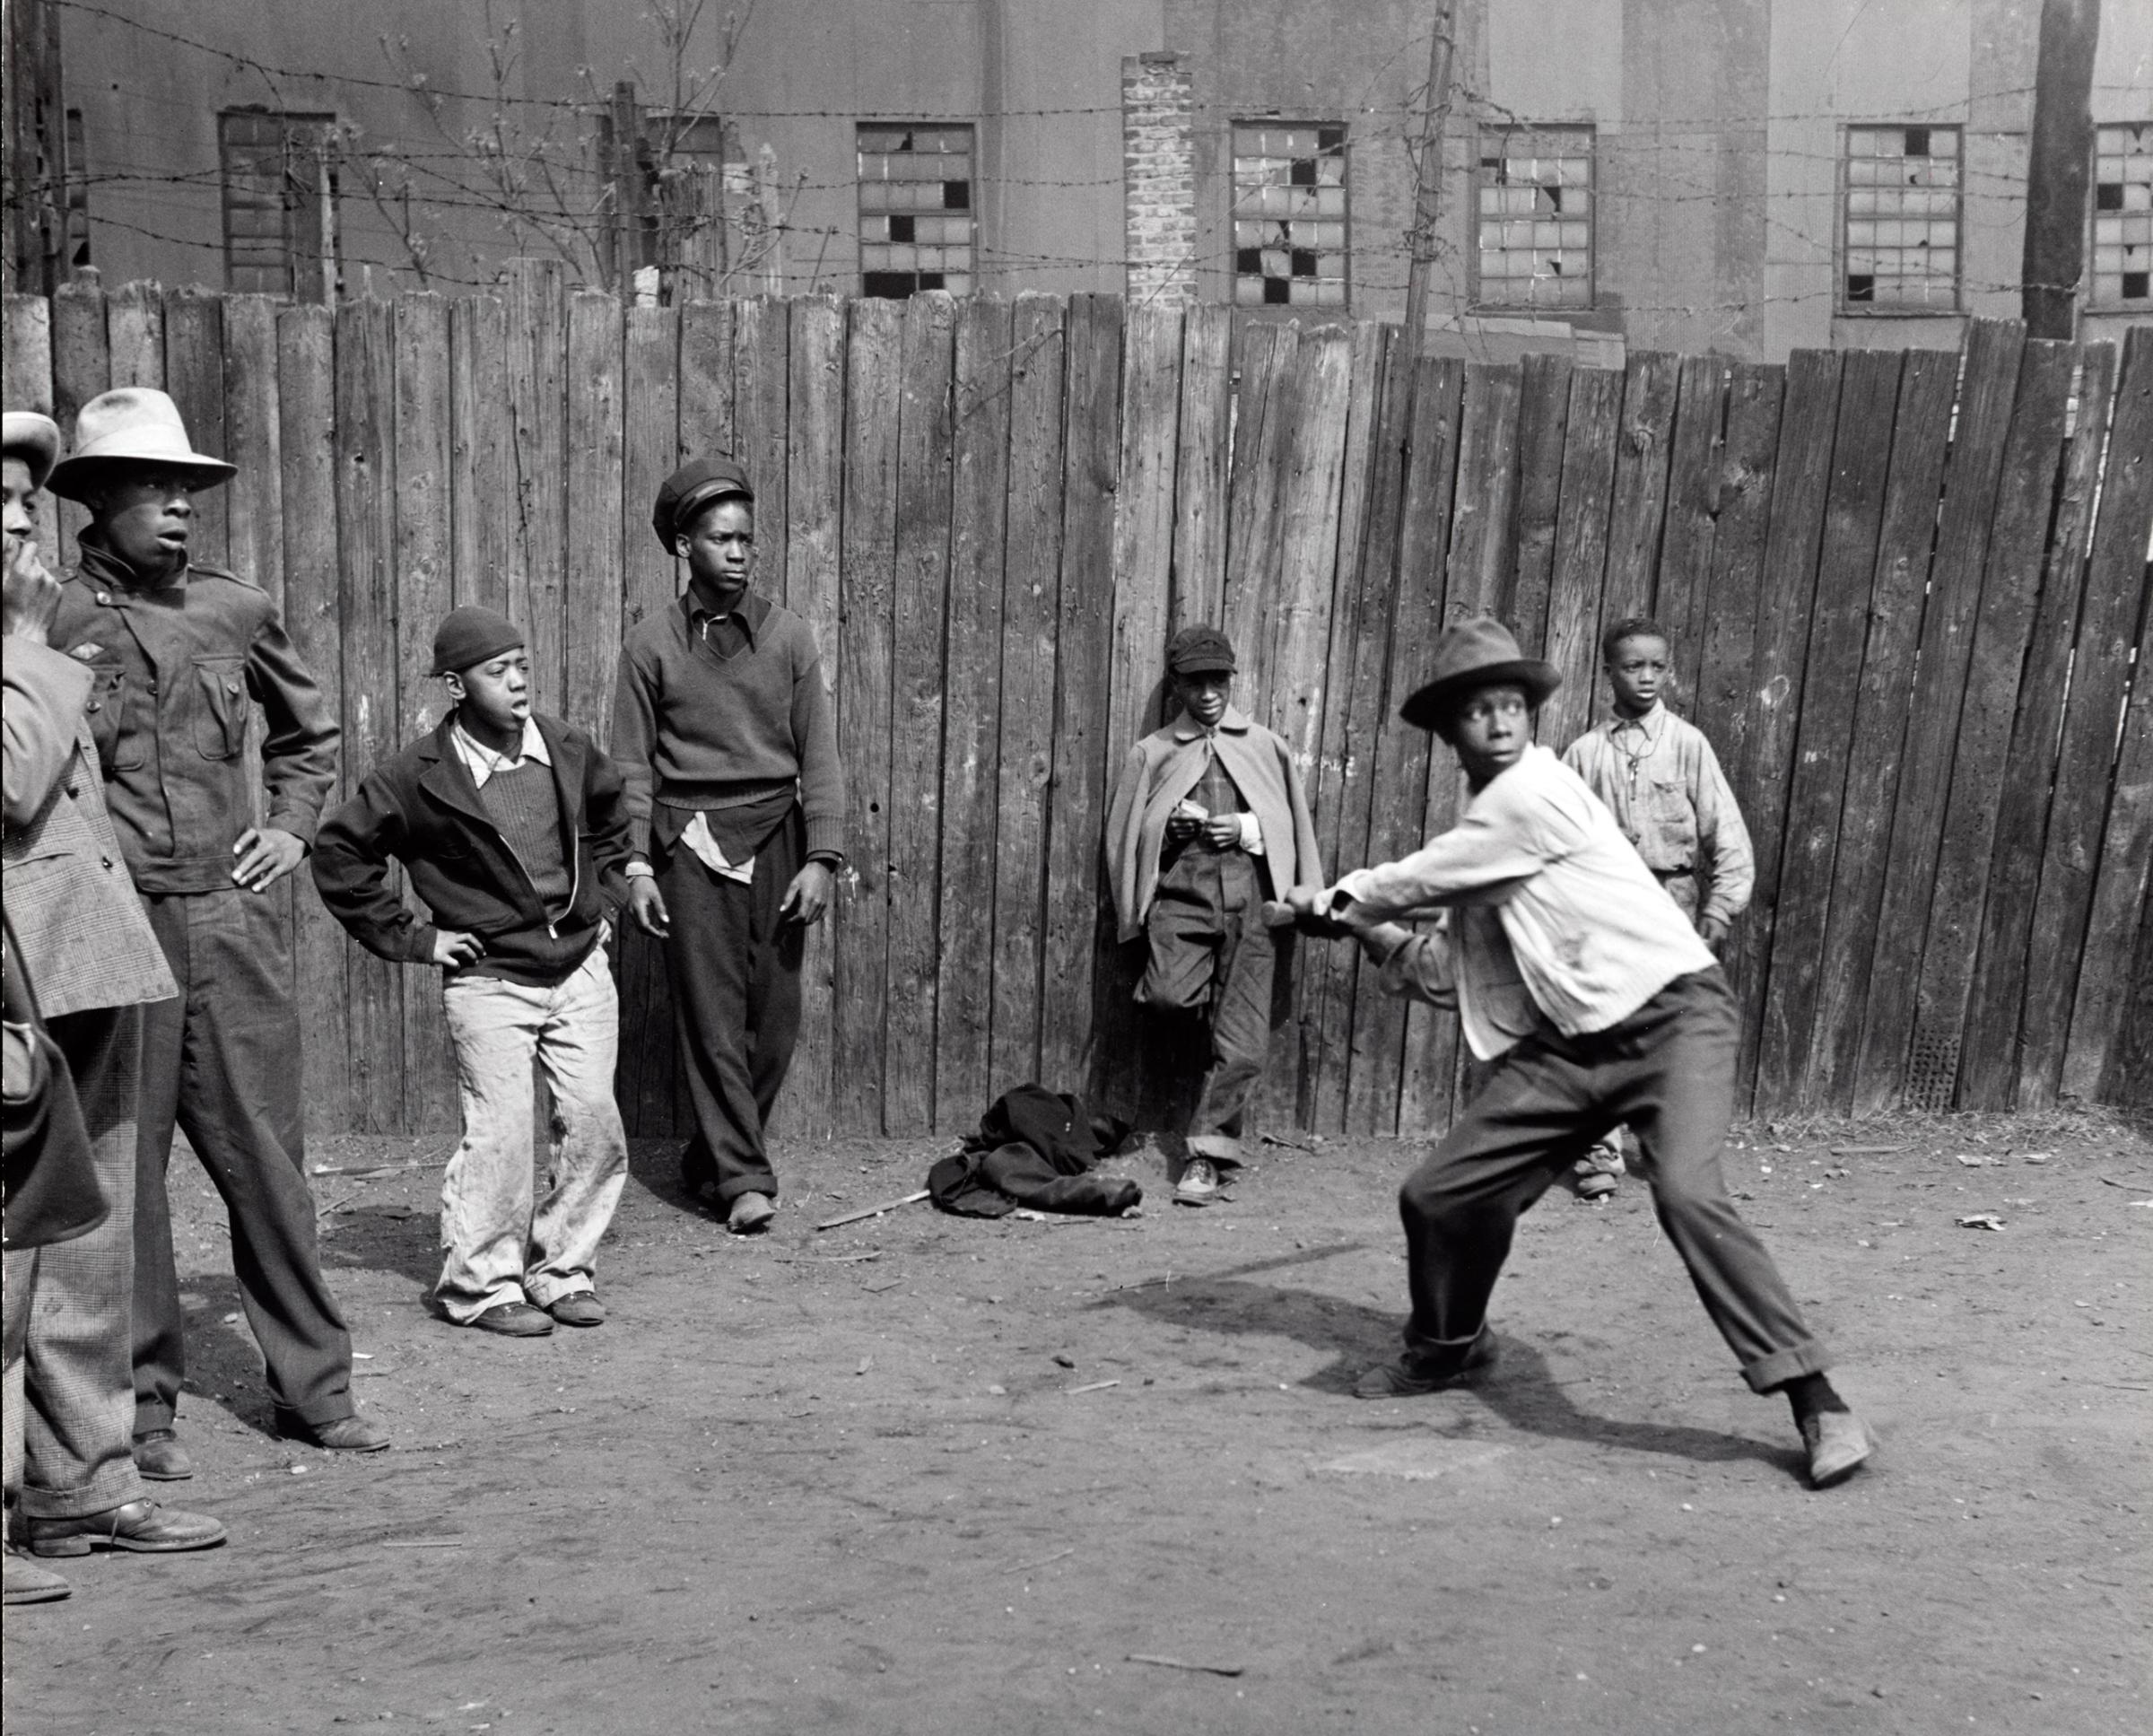 Wayne Miller photograph of children playing sandlot baseball circa 1946-1948.